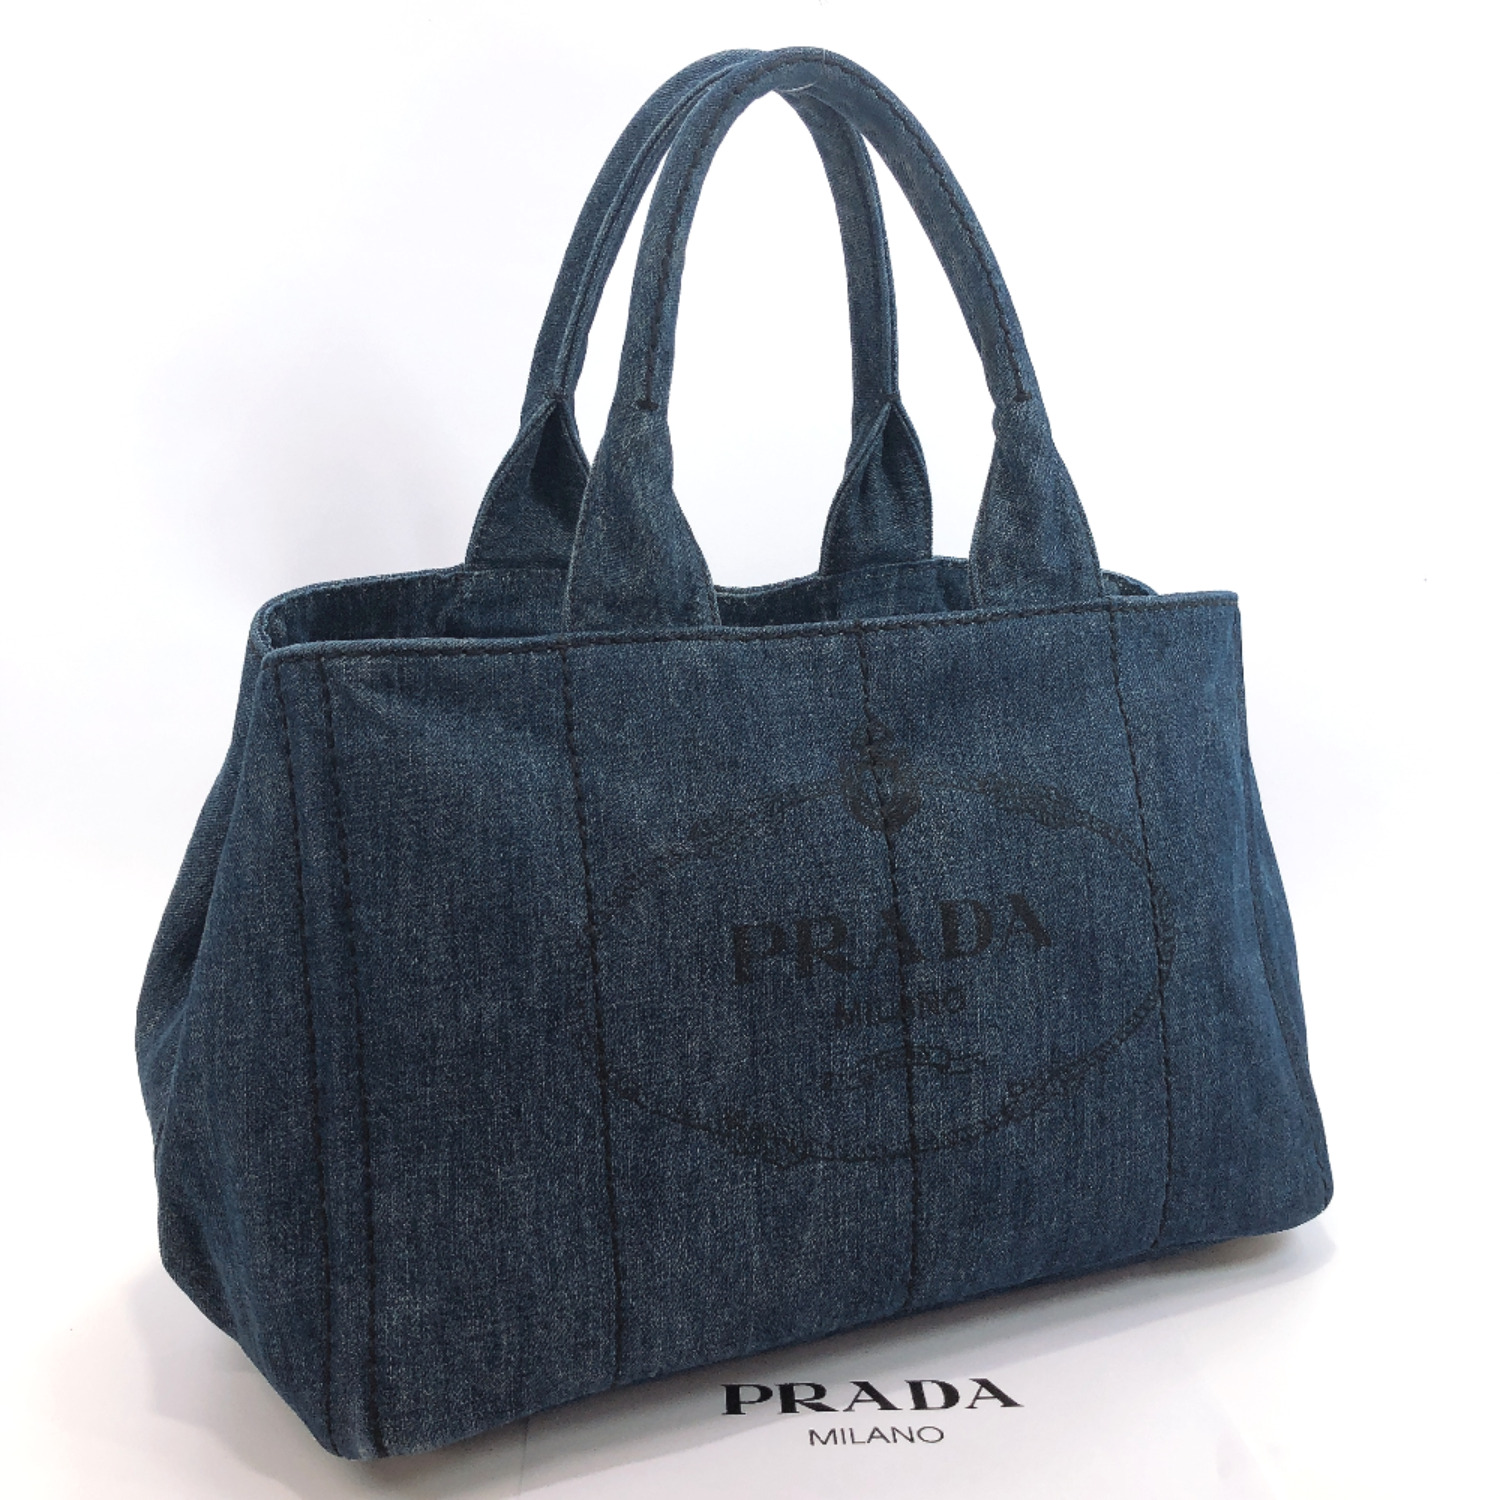 PRADA B1877B Canapa Tote Bag denim Women | eBay